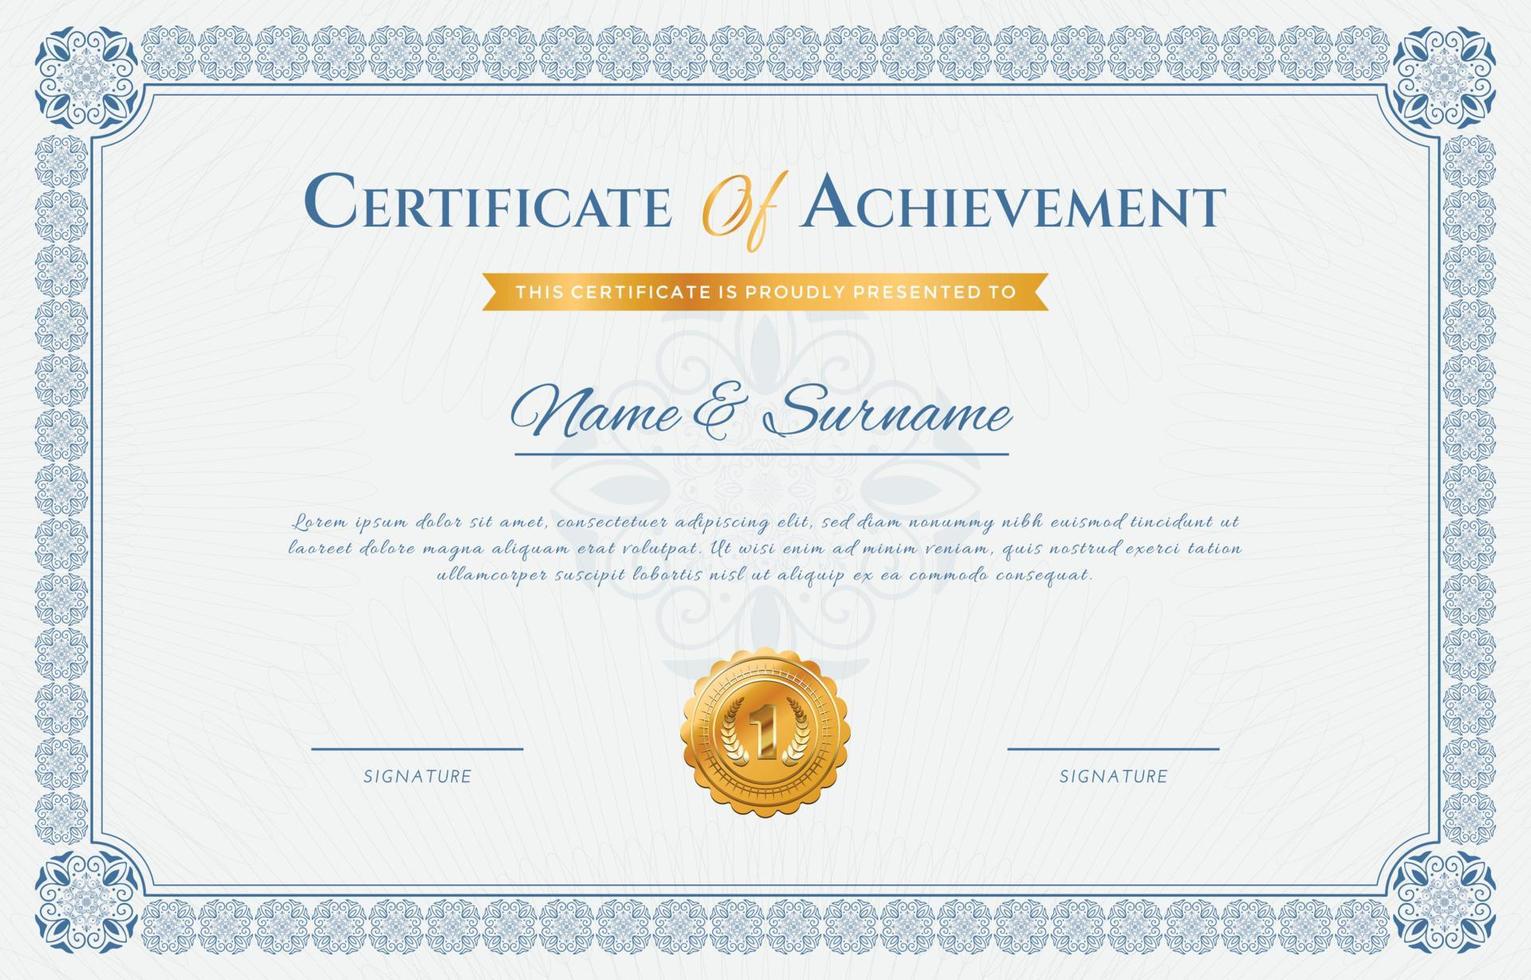 Certificate of Achievement for School Graduation Template vector